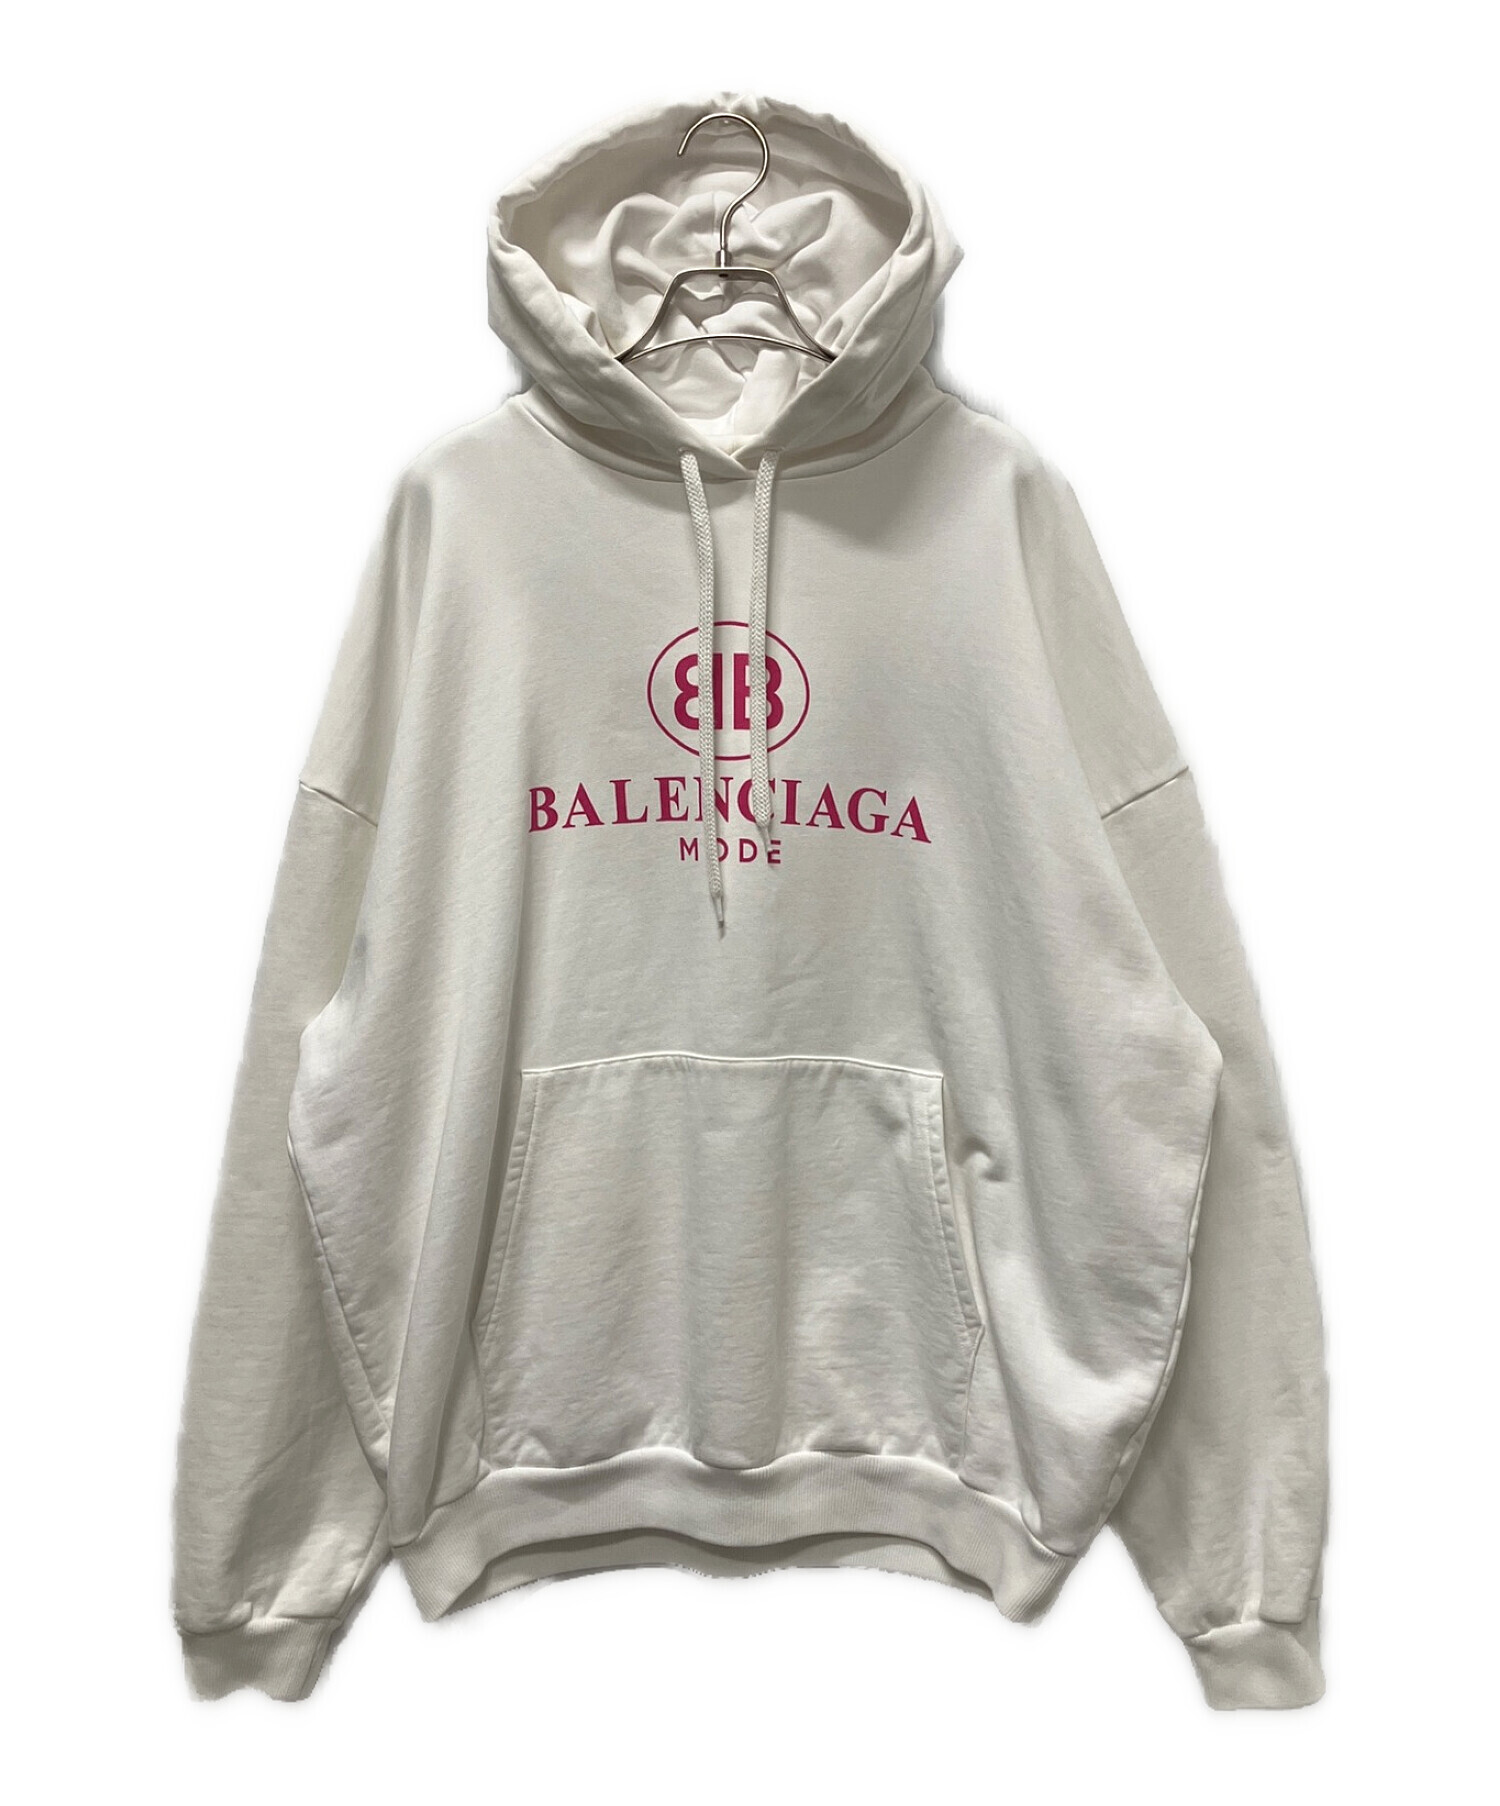 BALENCIAGA (バレンシアガ) ロゴプリントパーカー/フーディ ホワイト×ピンク サイズ:S